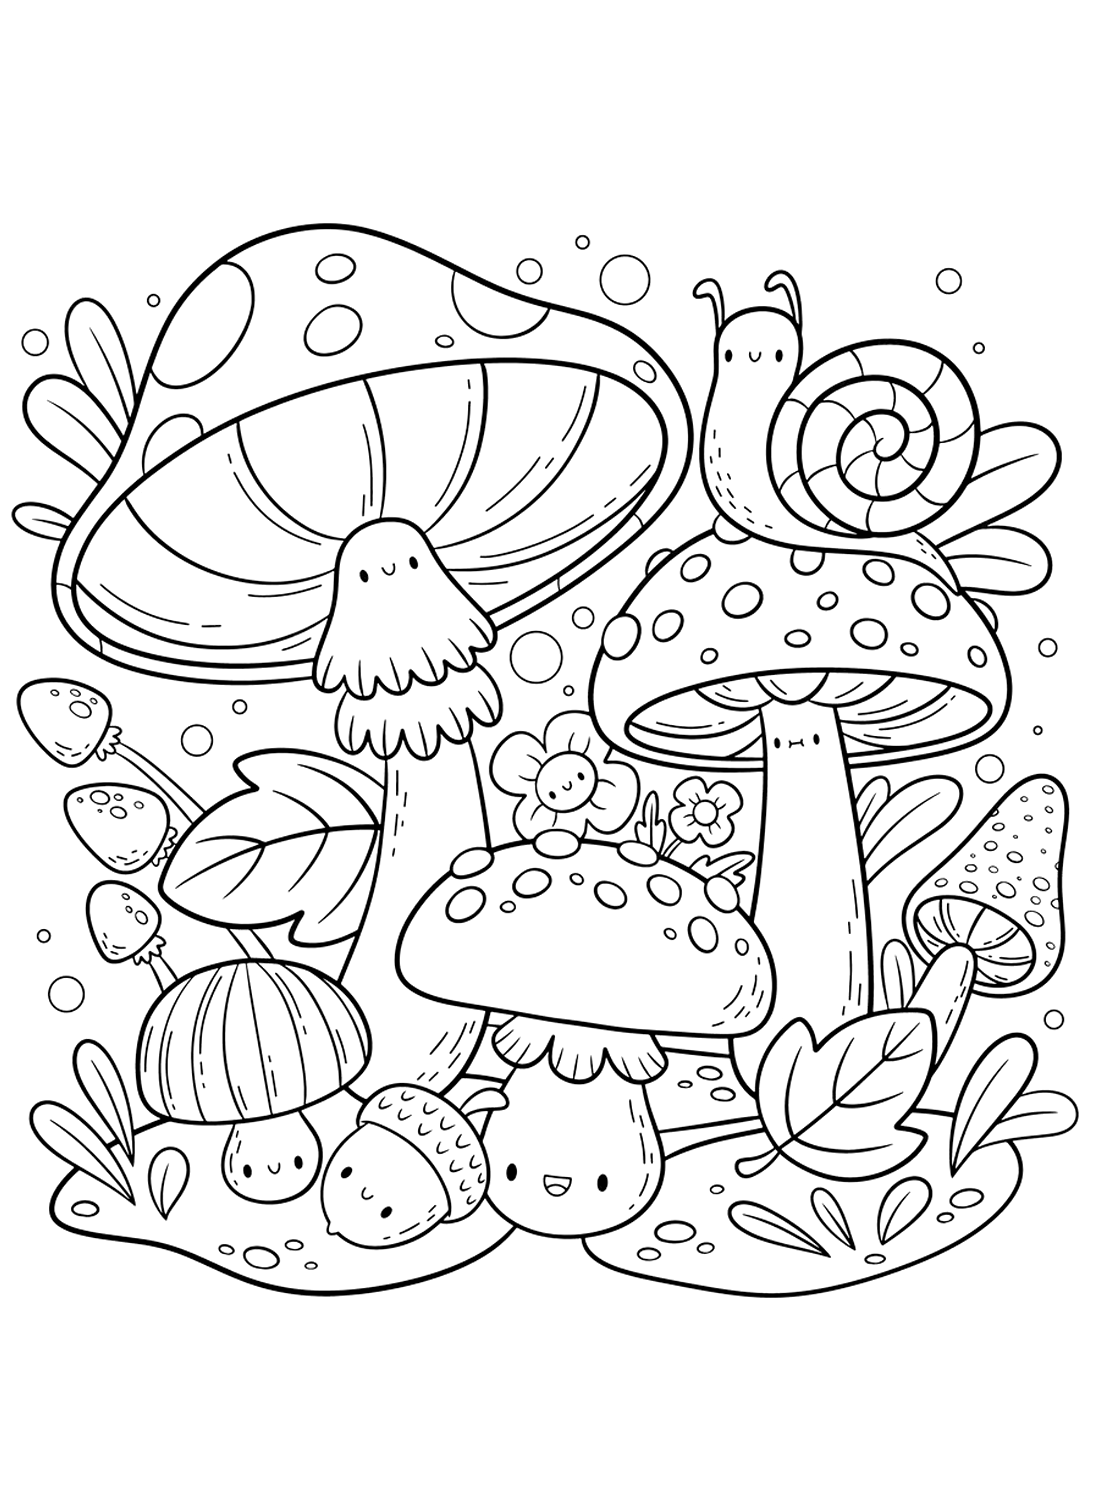 Mushroom and cute animals sheet